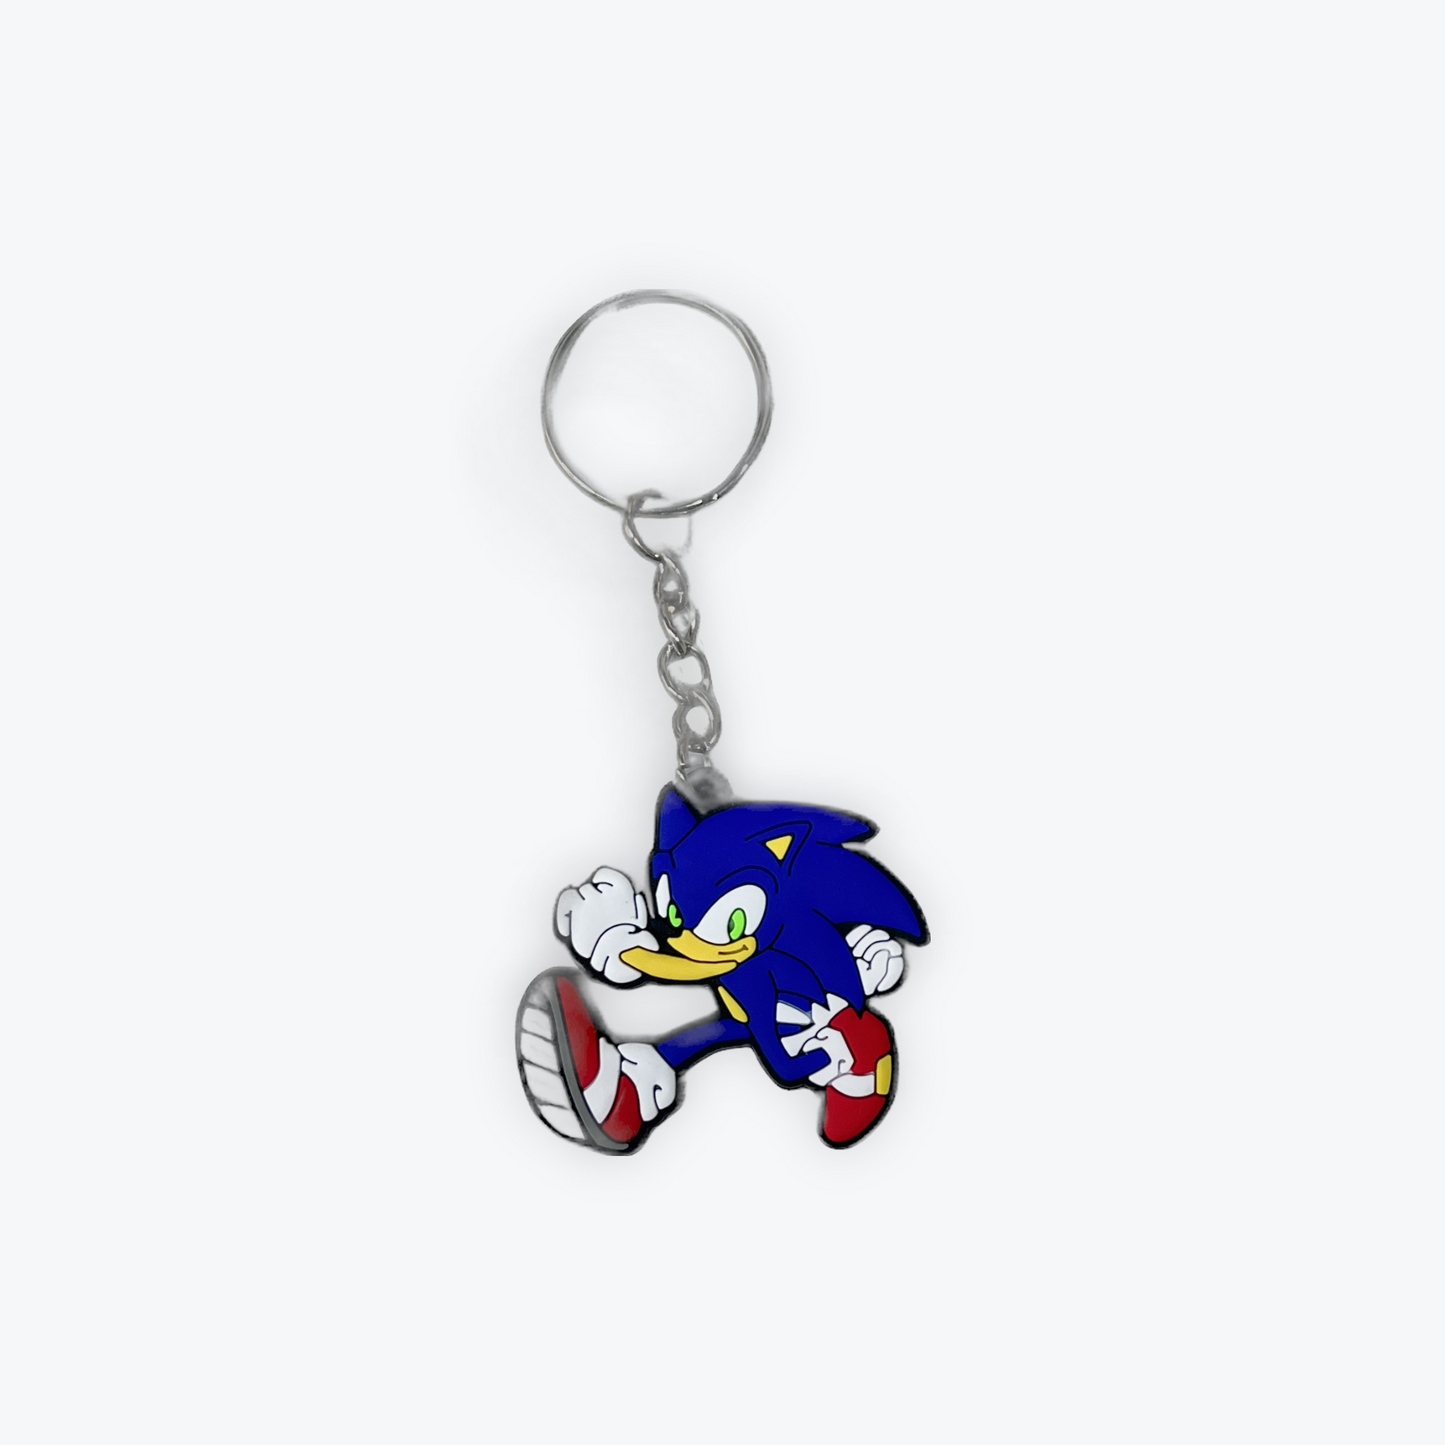 Sonic The Hedgehog Keychains - 7 Models